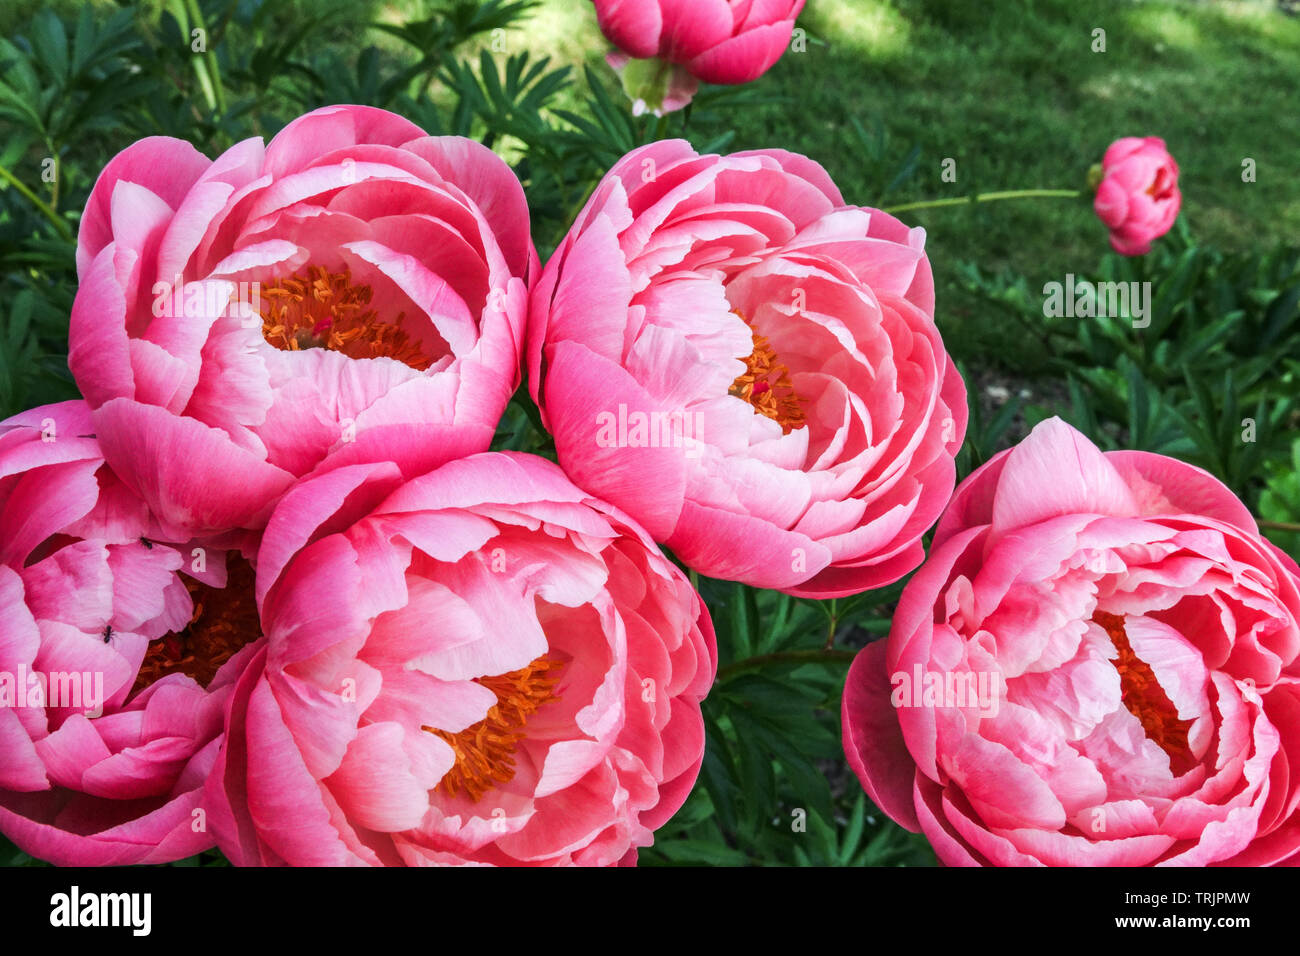 Hübsche rosa Pfingstrosen Blumen, Pfingstrosen Blumen 'Coral Charm' krautige Pfingstrosen im Garten Stockfoto